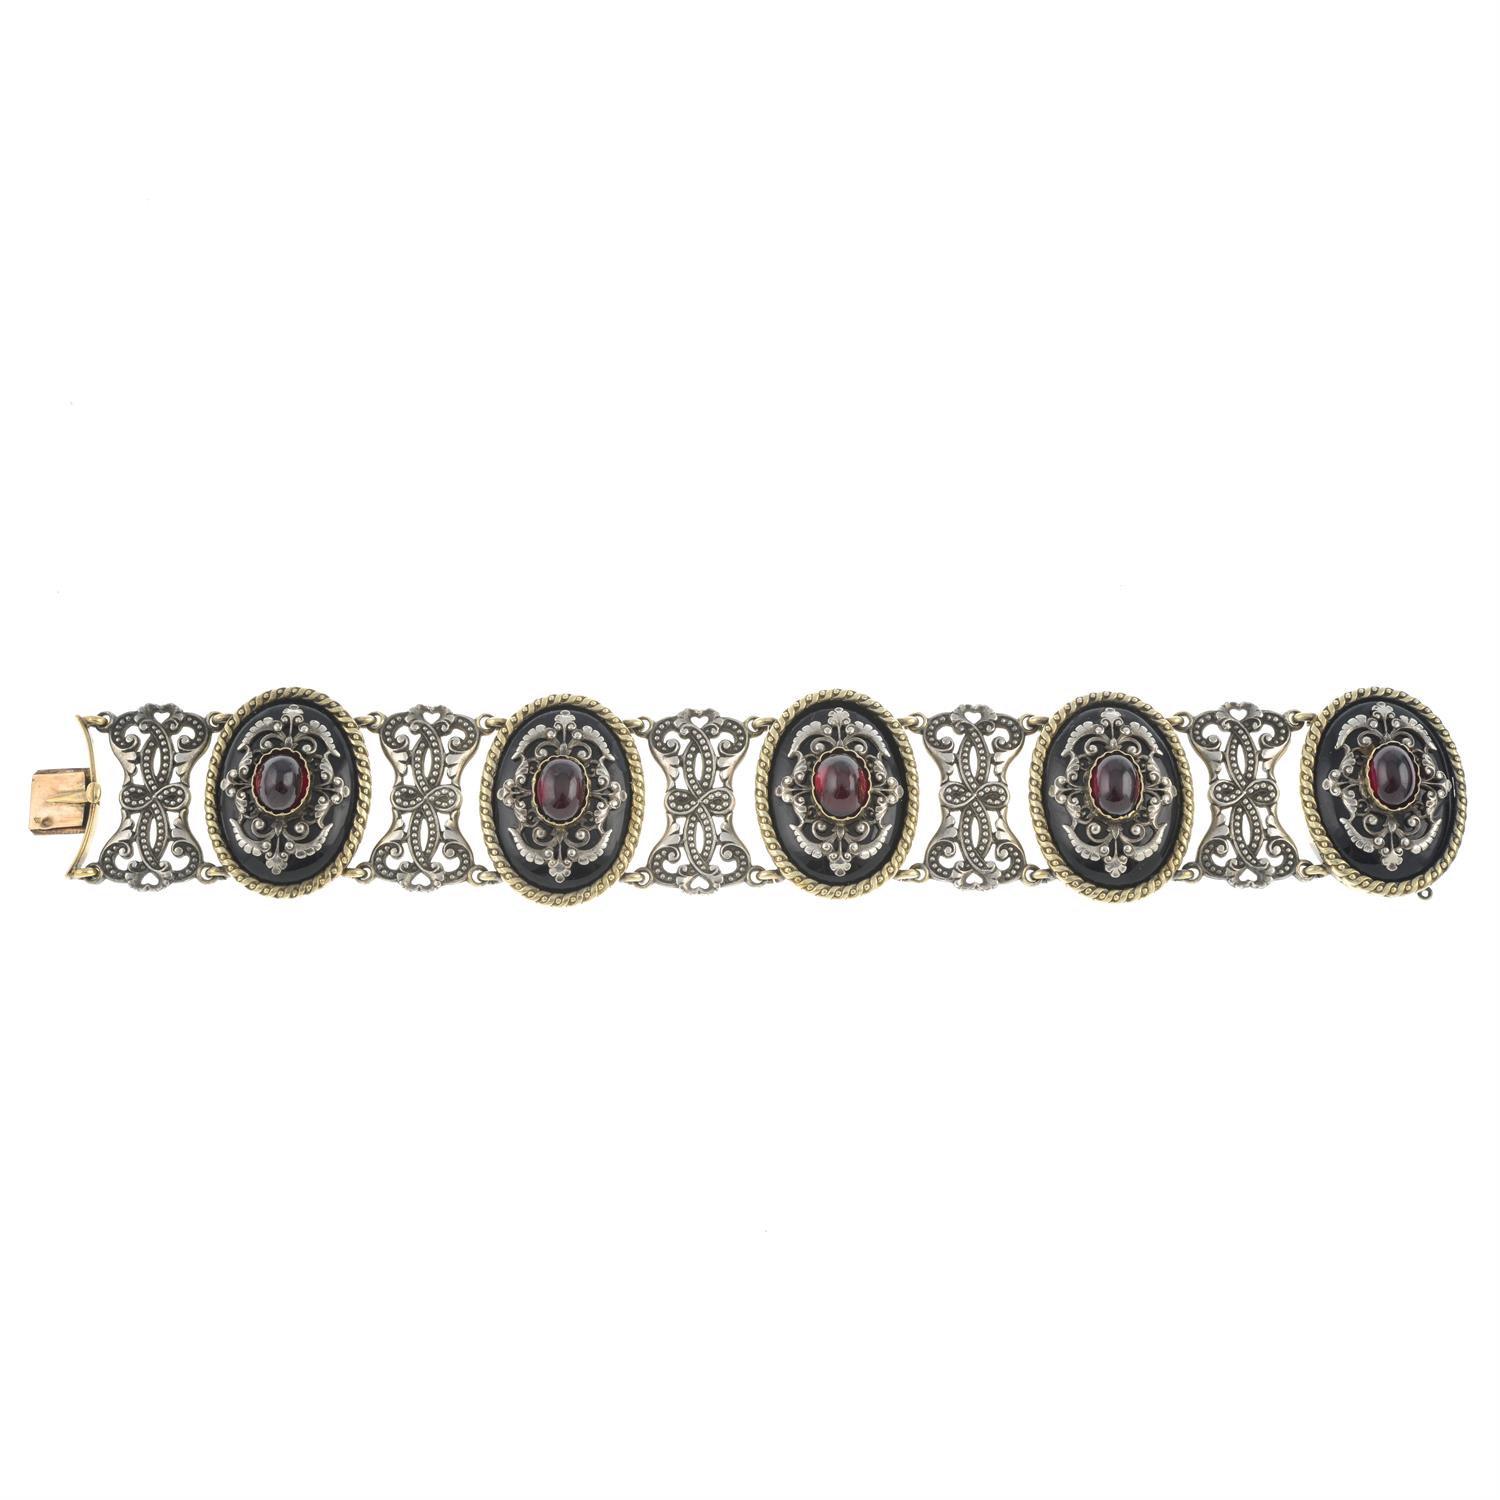 Silver and gold, garnet and enamel bracelet, J. Wiese - Image 2 of 6